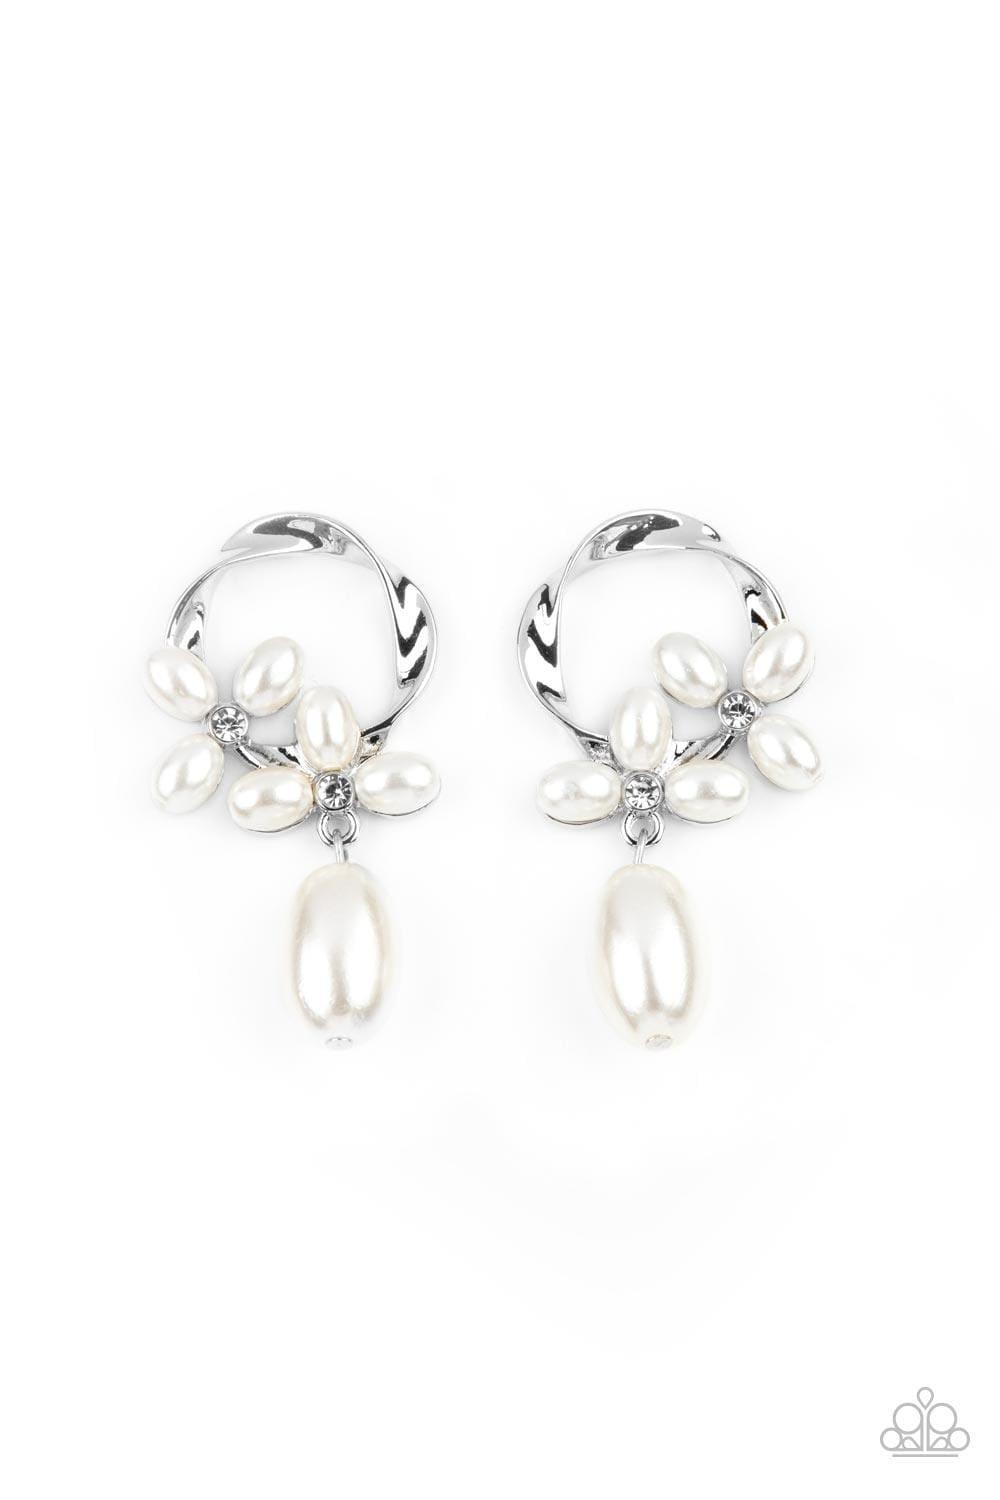 Paparazzi Accessories - Elegant Expo - White Post Earrings - Bling by JessieK